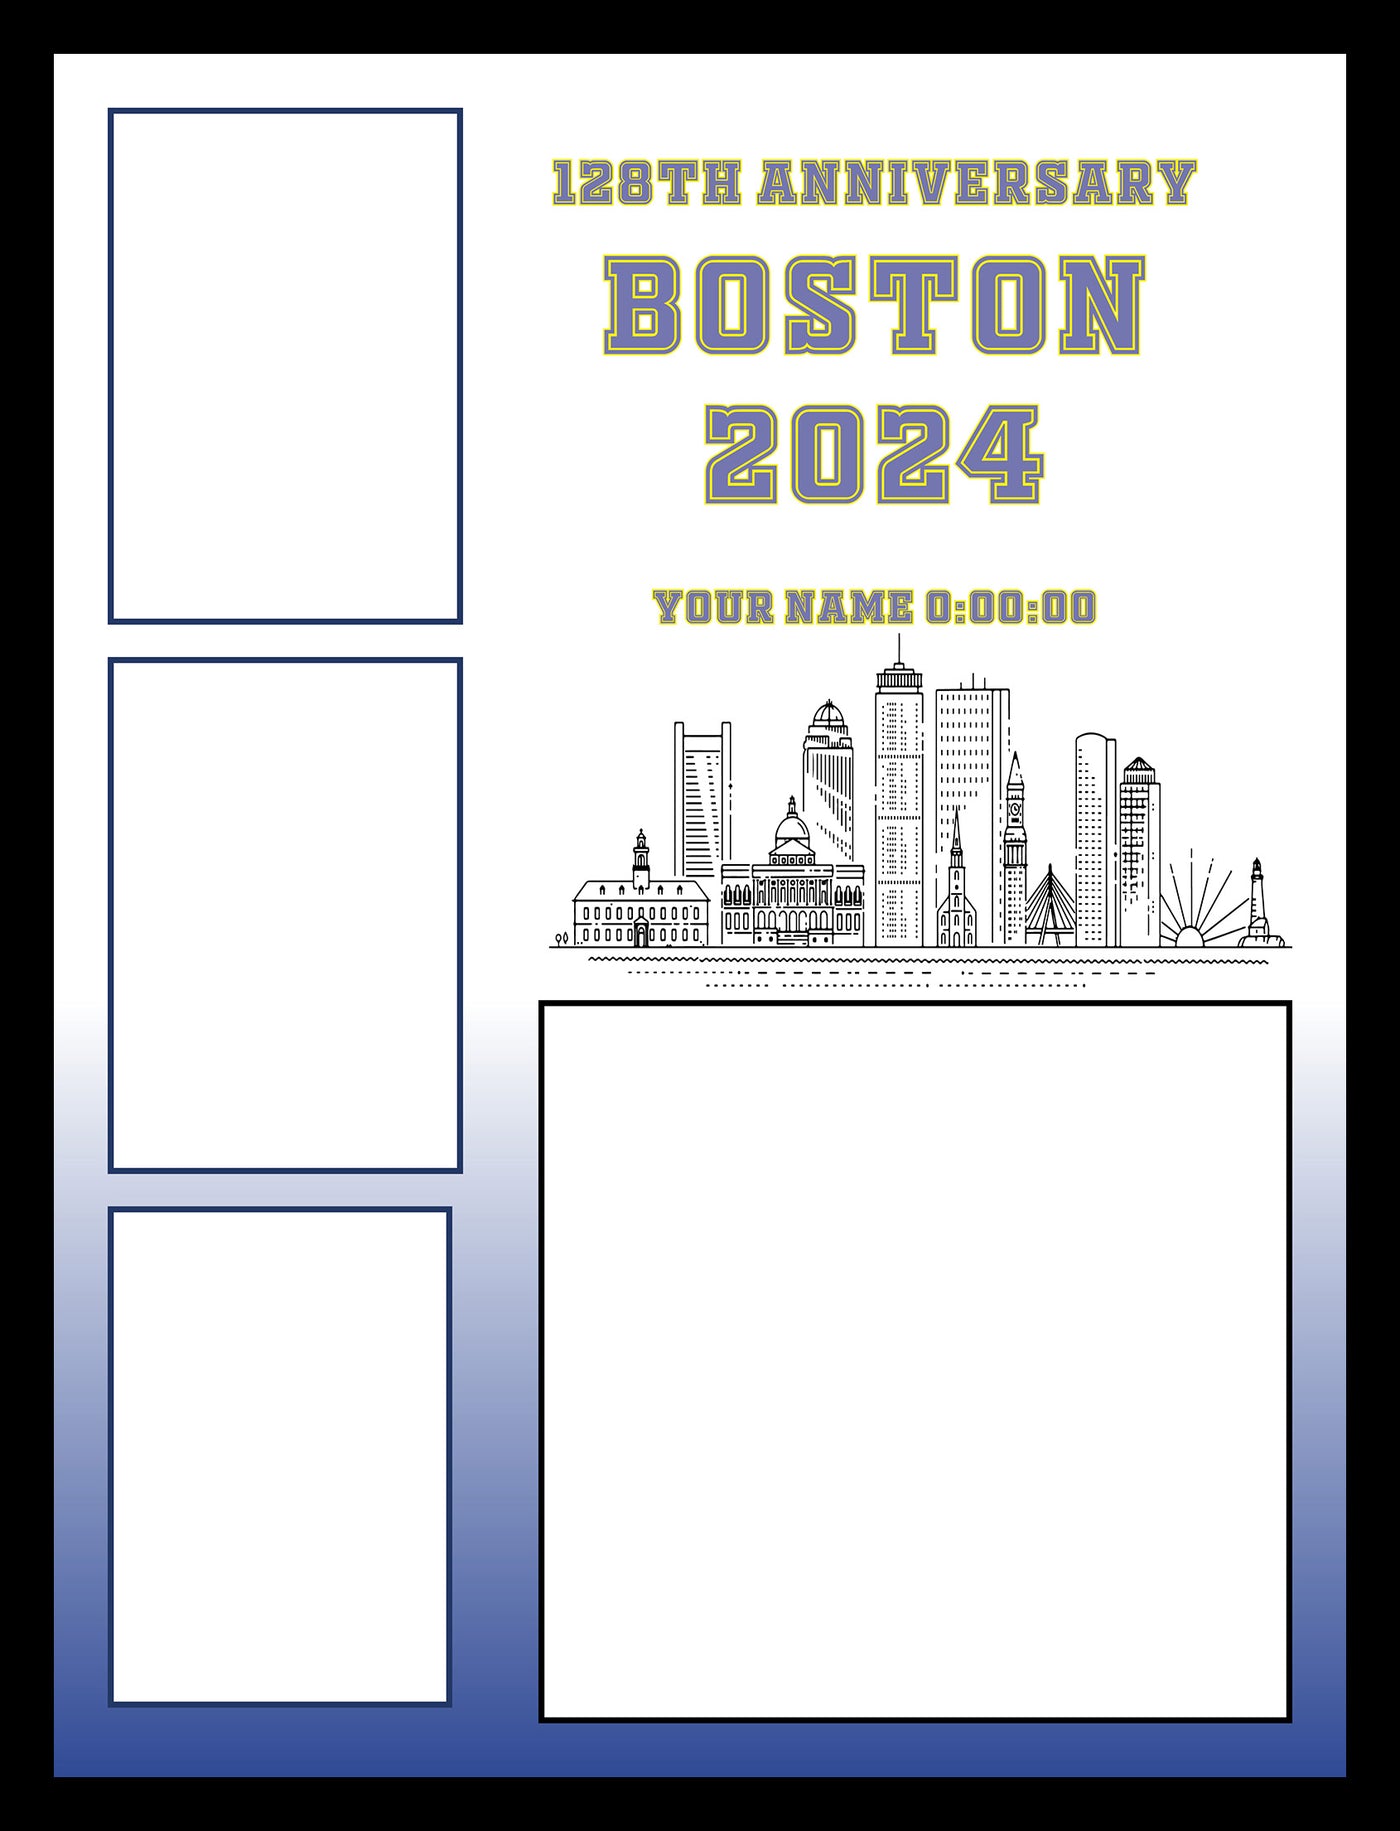 Boston 2024